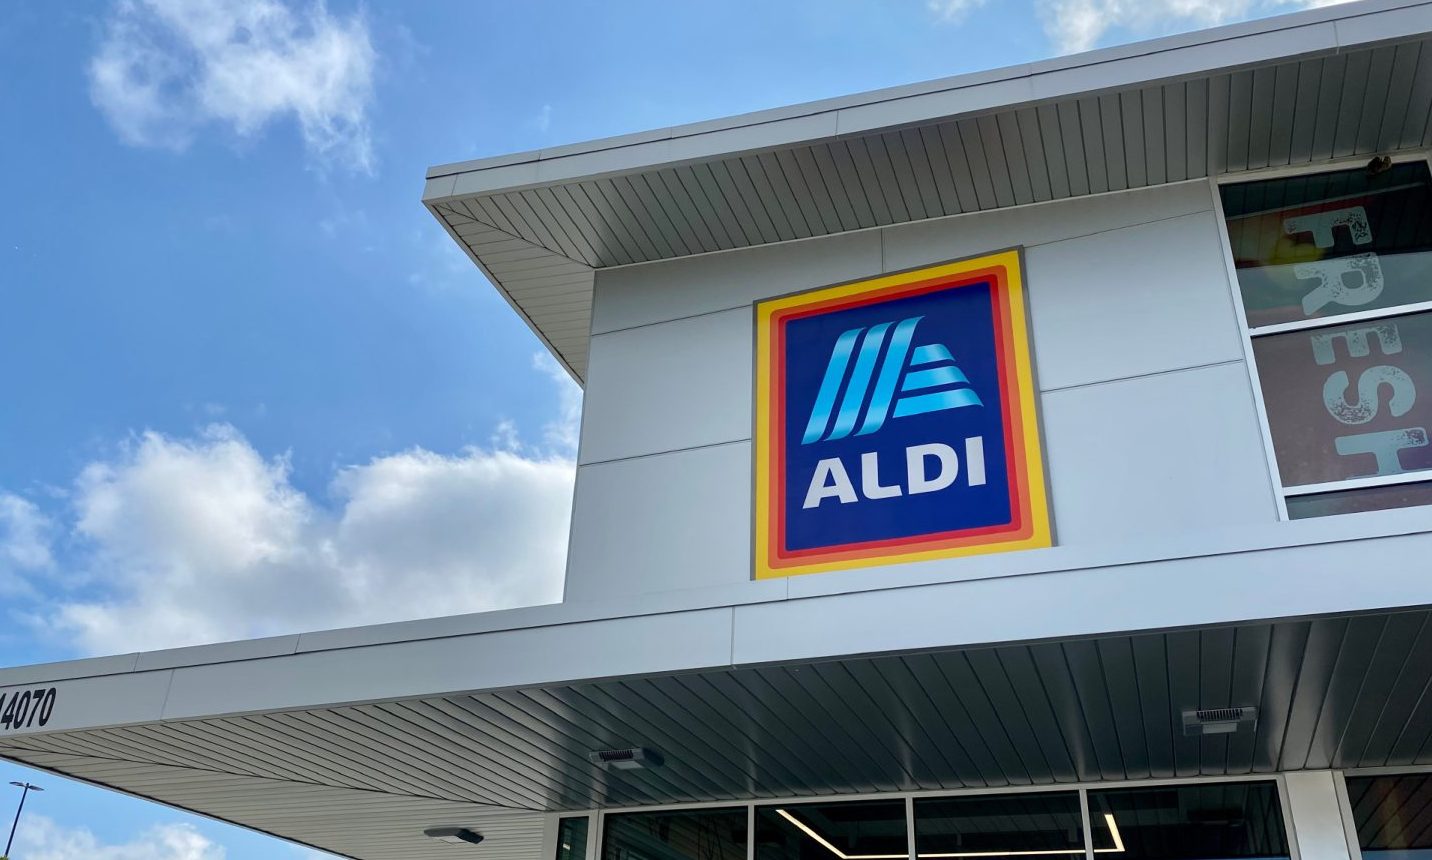 Discount supermarket Aldi is planning a store in Arbroath. Image: Shutterstock